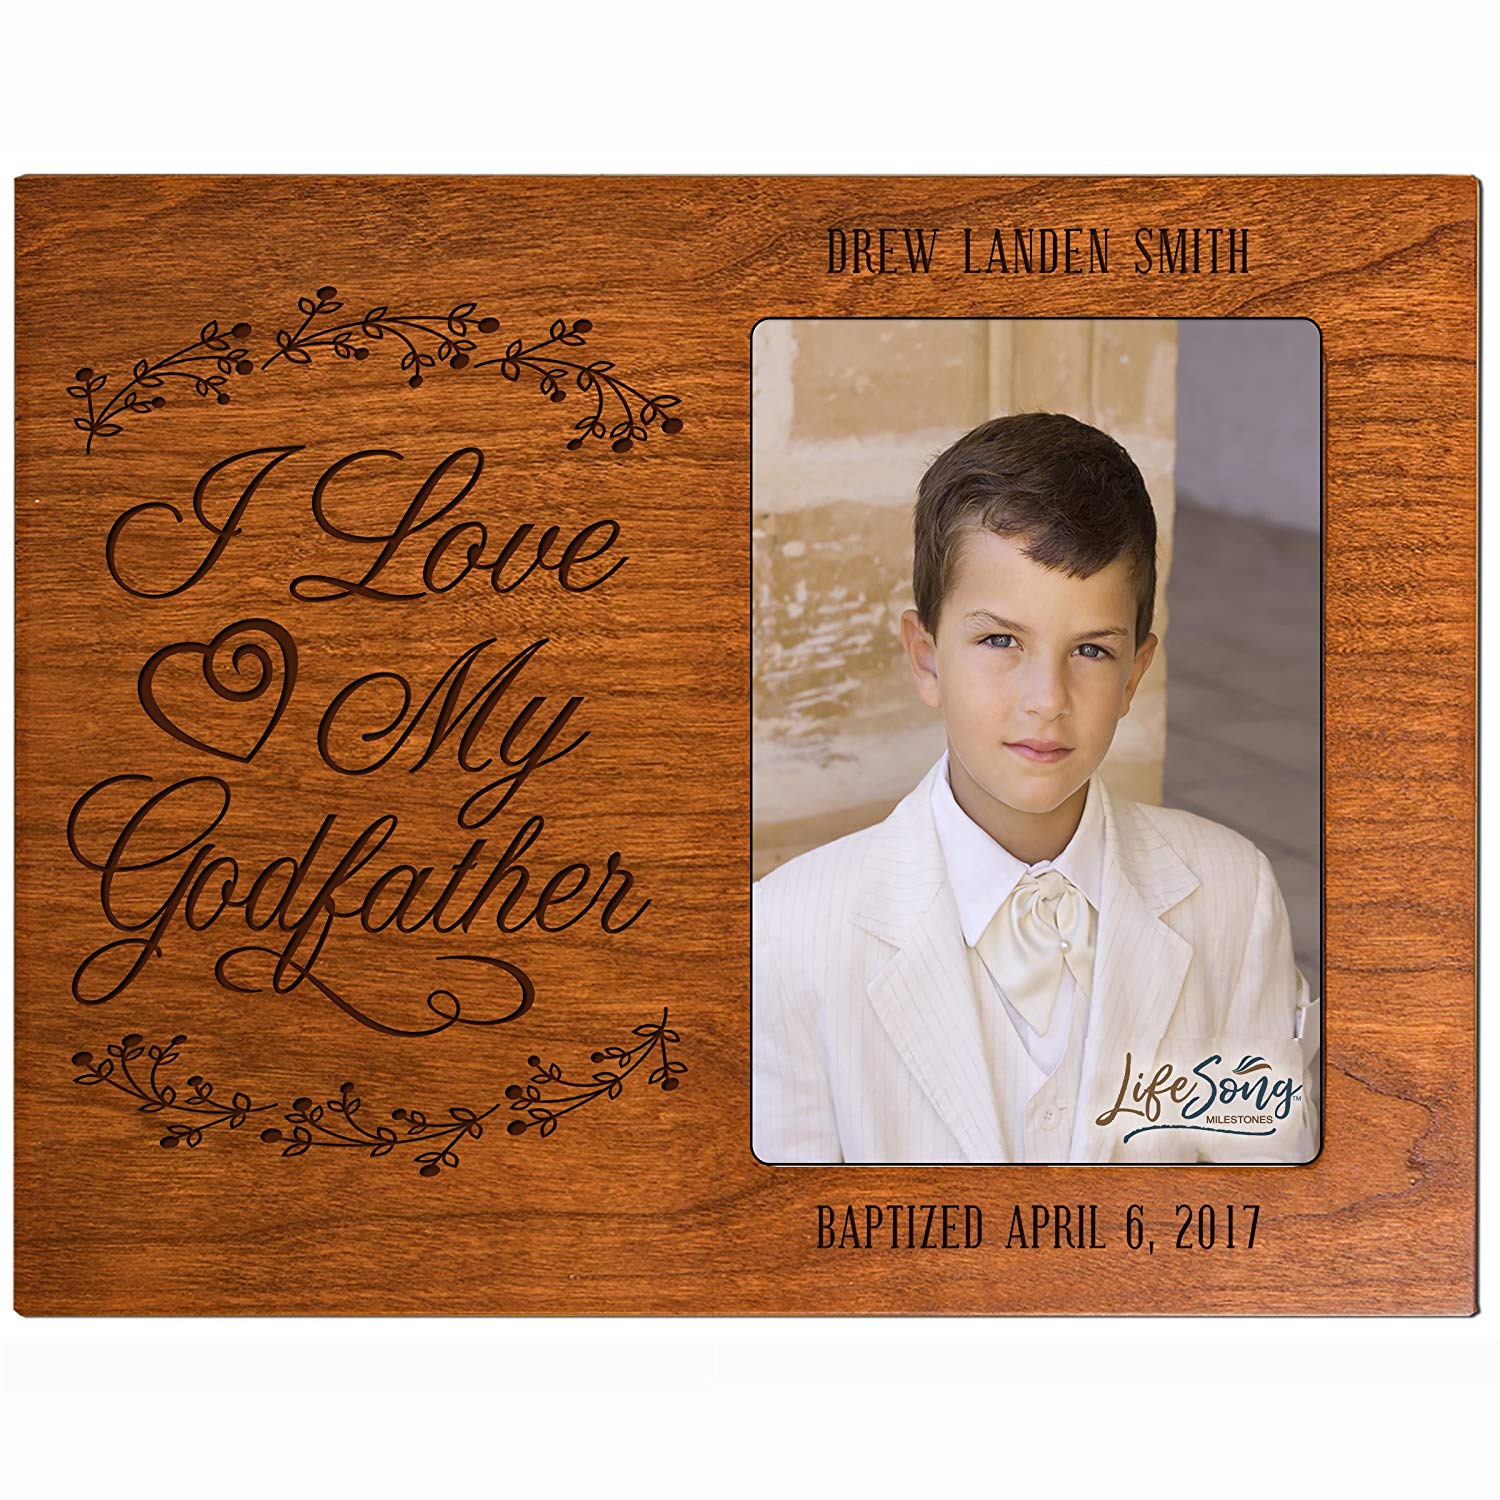 Personalized Godfather Gift Photo Frame - I Love My Godfather - LifeSong Milestones